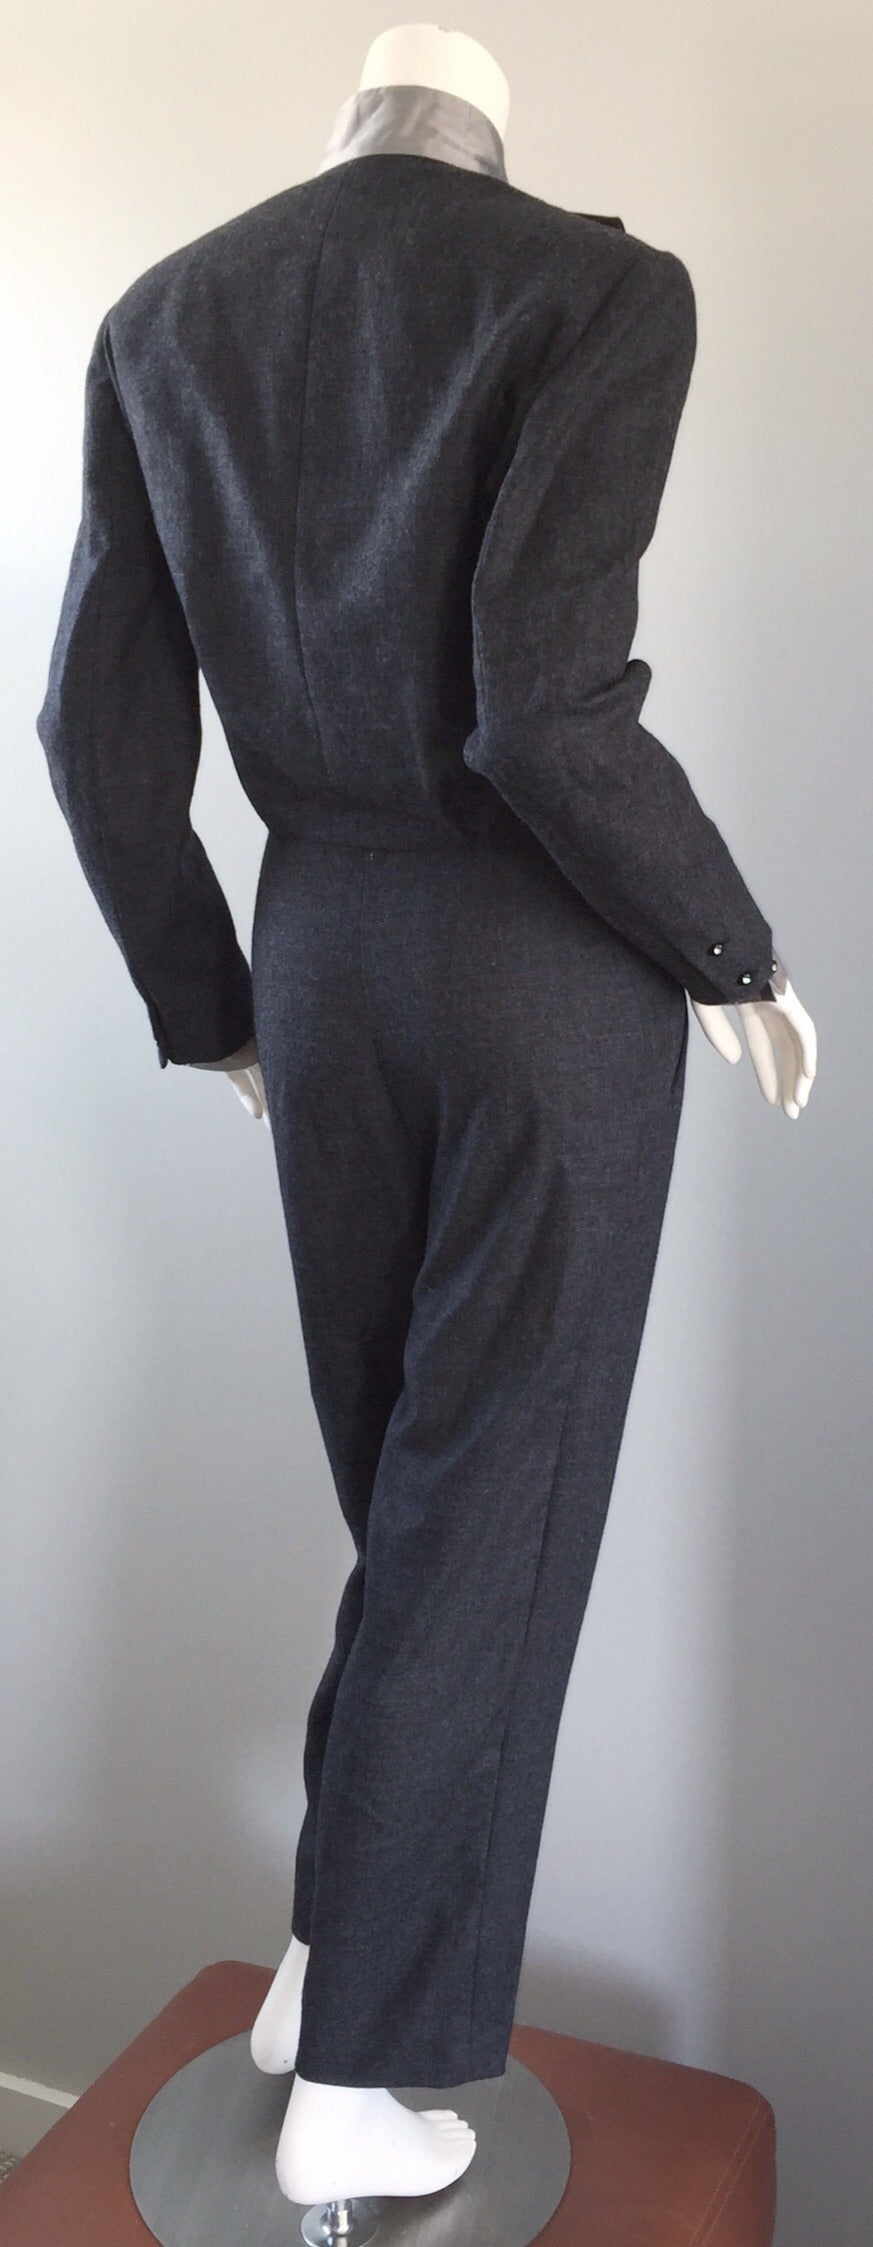 Black Rare Early Alberta Ferretti Charcoal Gray Vintage Tuxedo Jumpsuit